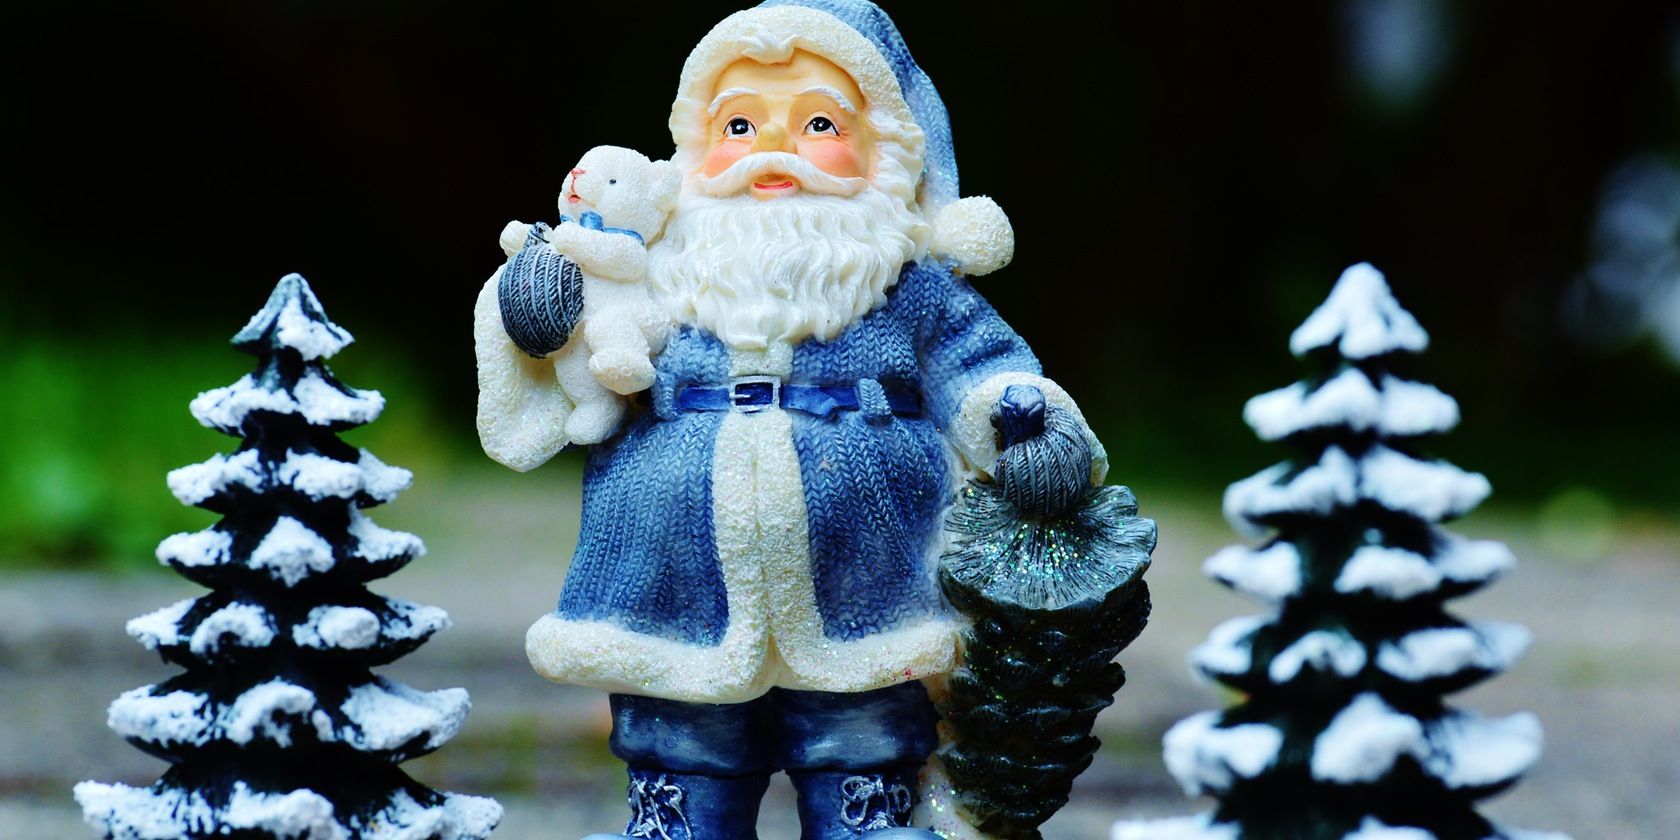 Close-up of a Santa statue next to Christmas trees